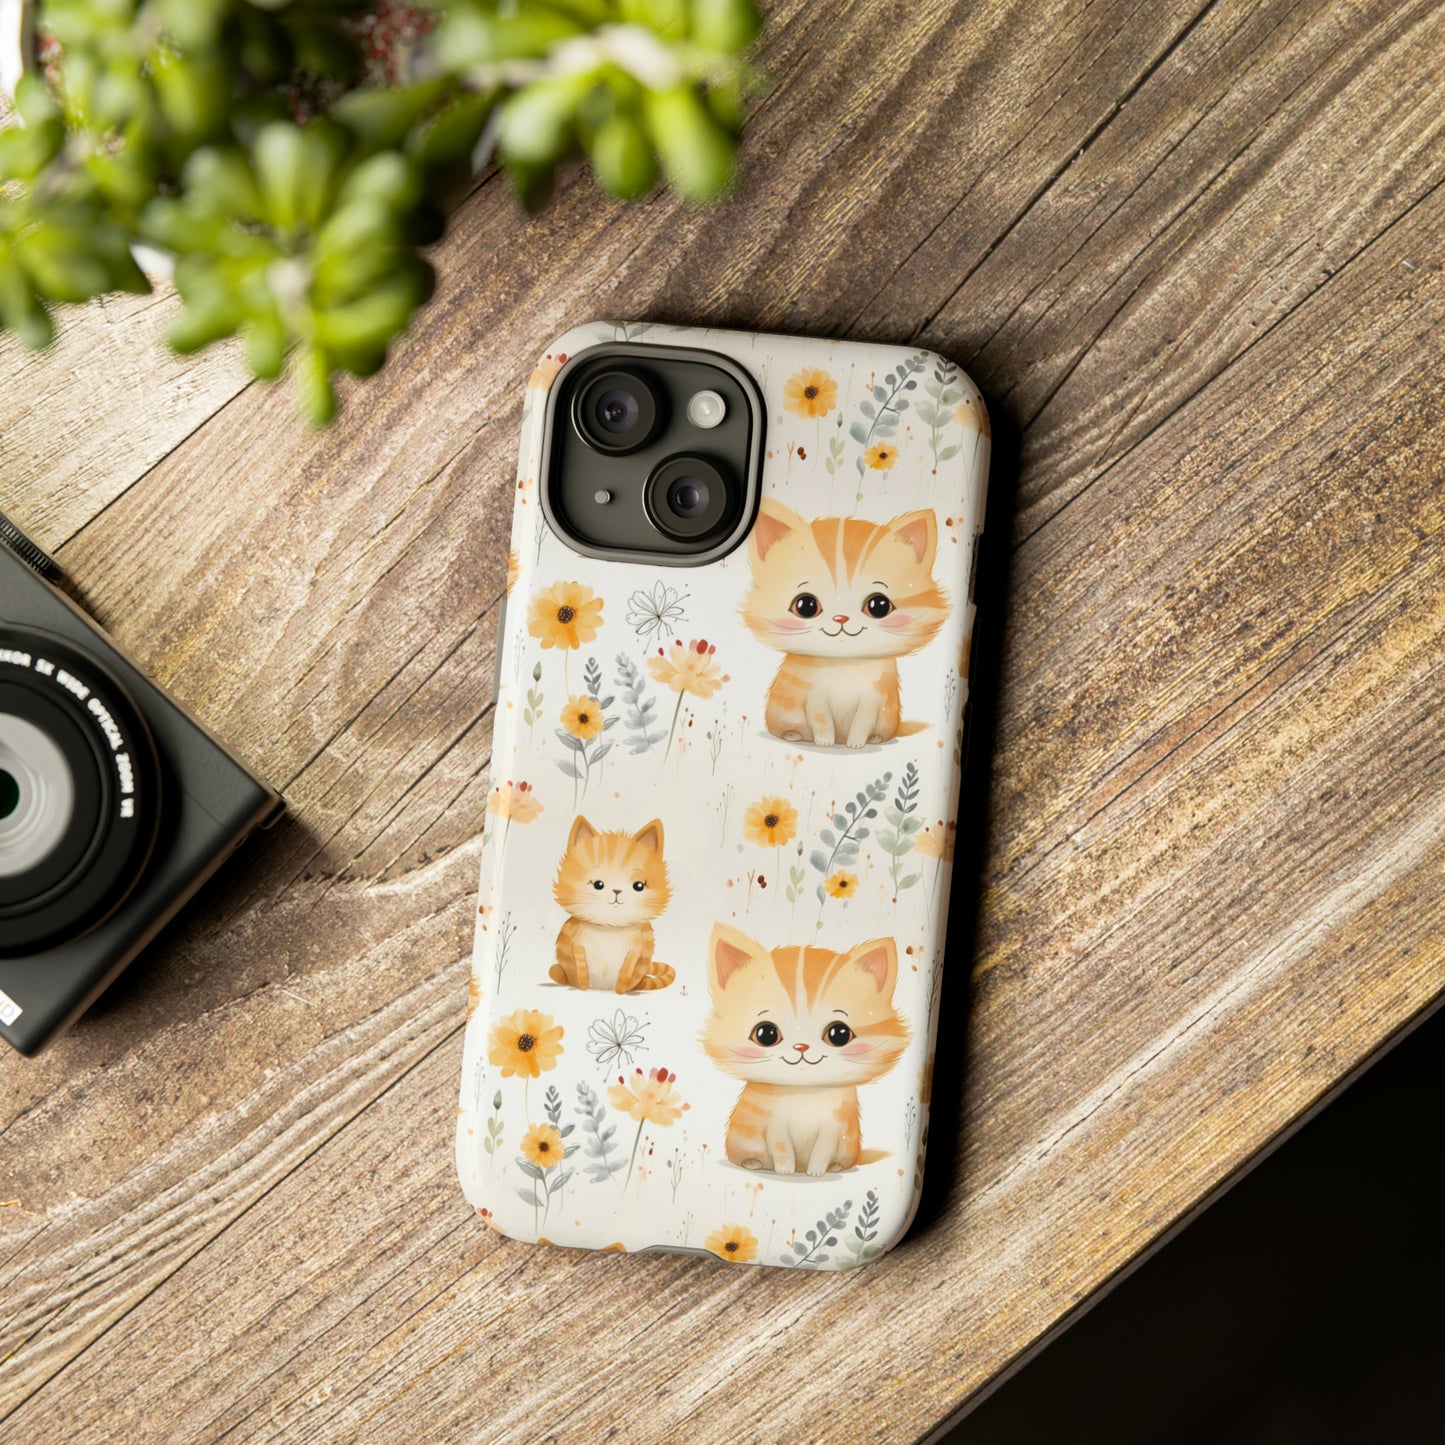 Kitten pattern phone case/cover.